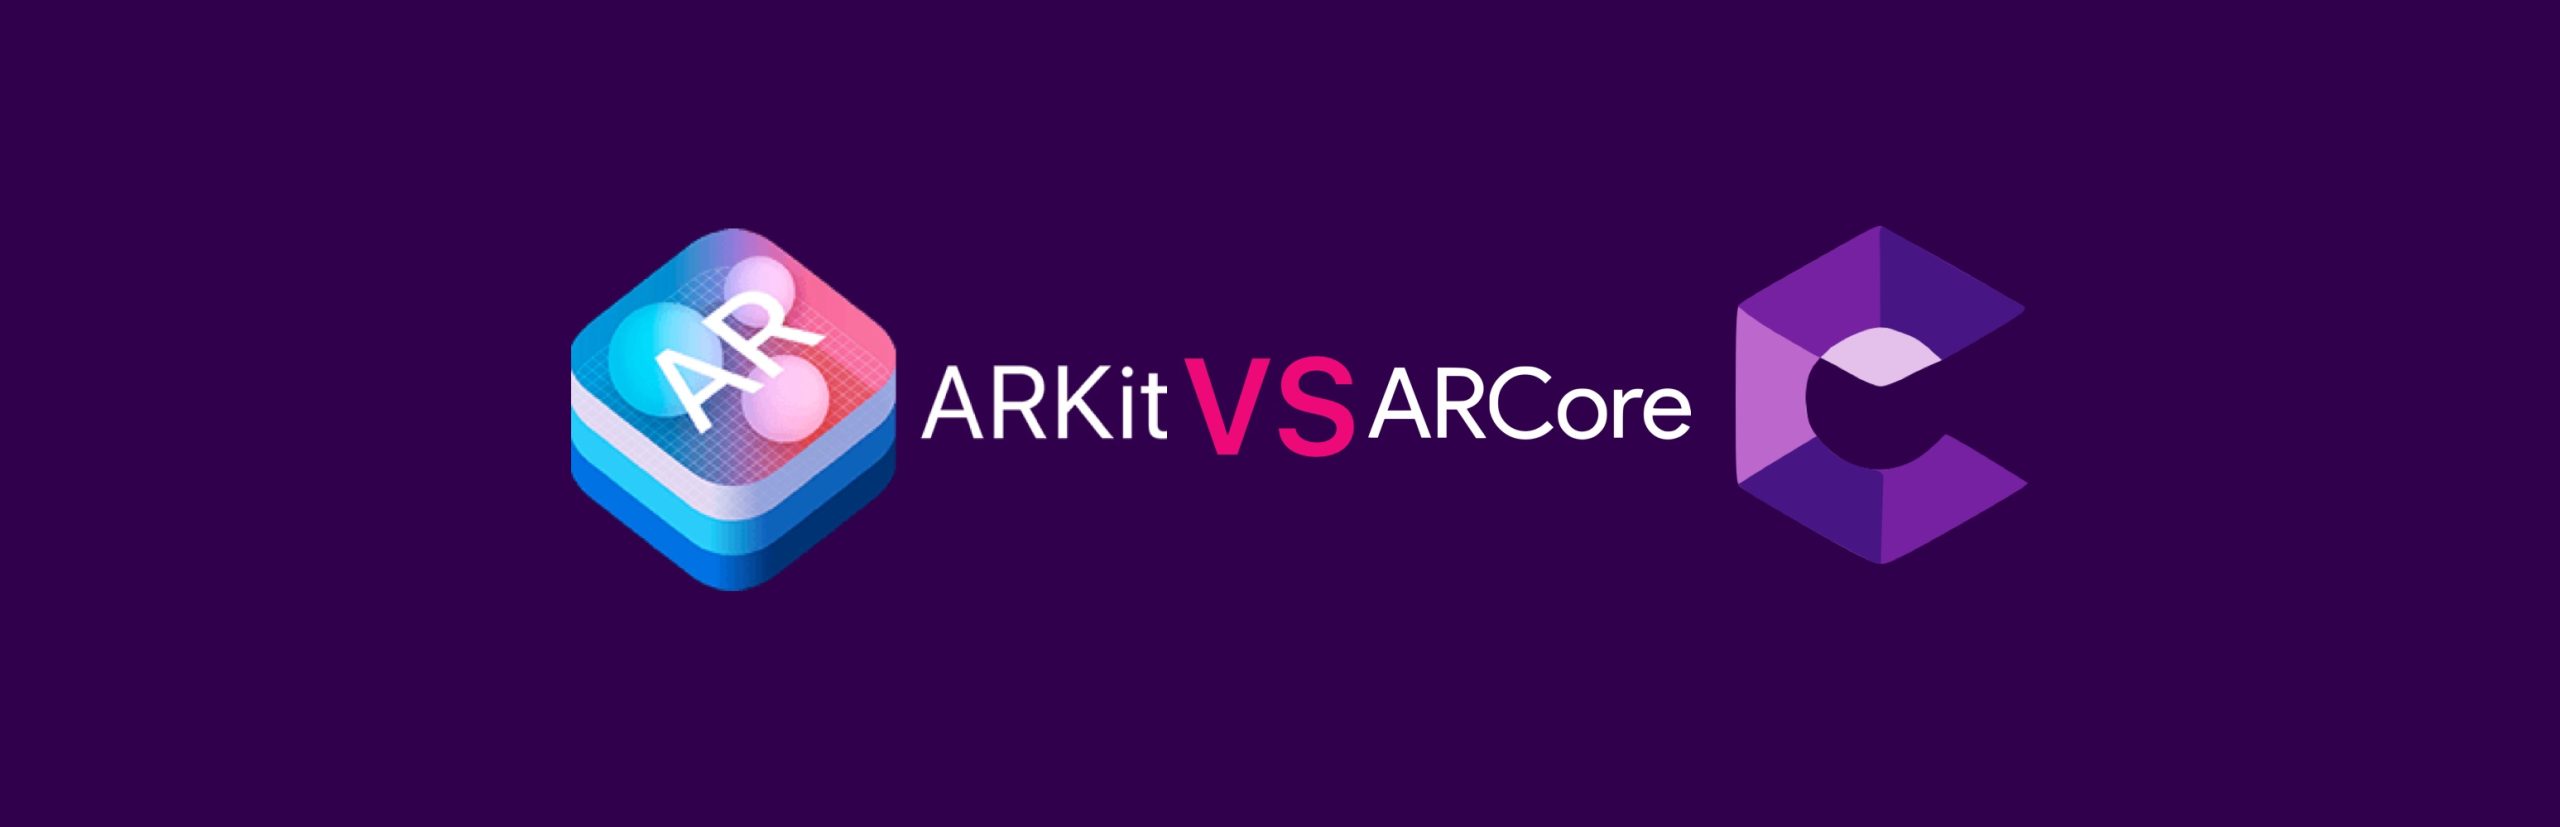 ARkit vs ARcore